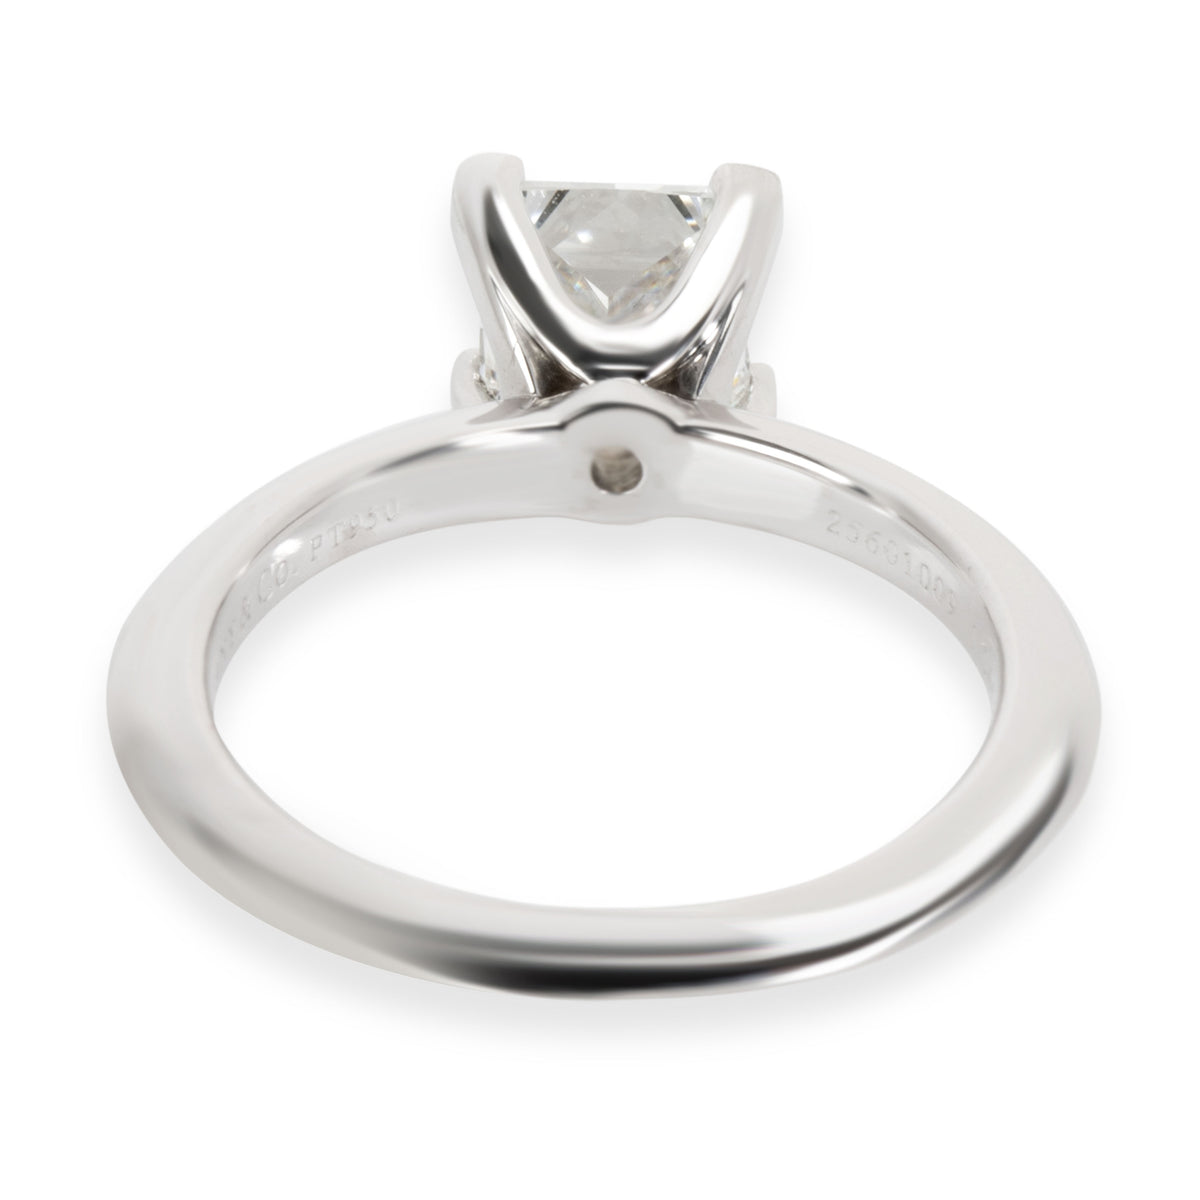 Tiffany & Co. Princess Cut Diamond Engagement Ring in Platinum (1.04 ct F/VVS2)